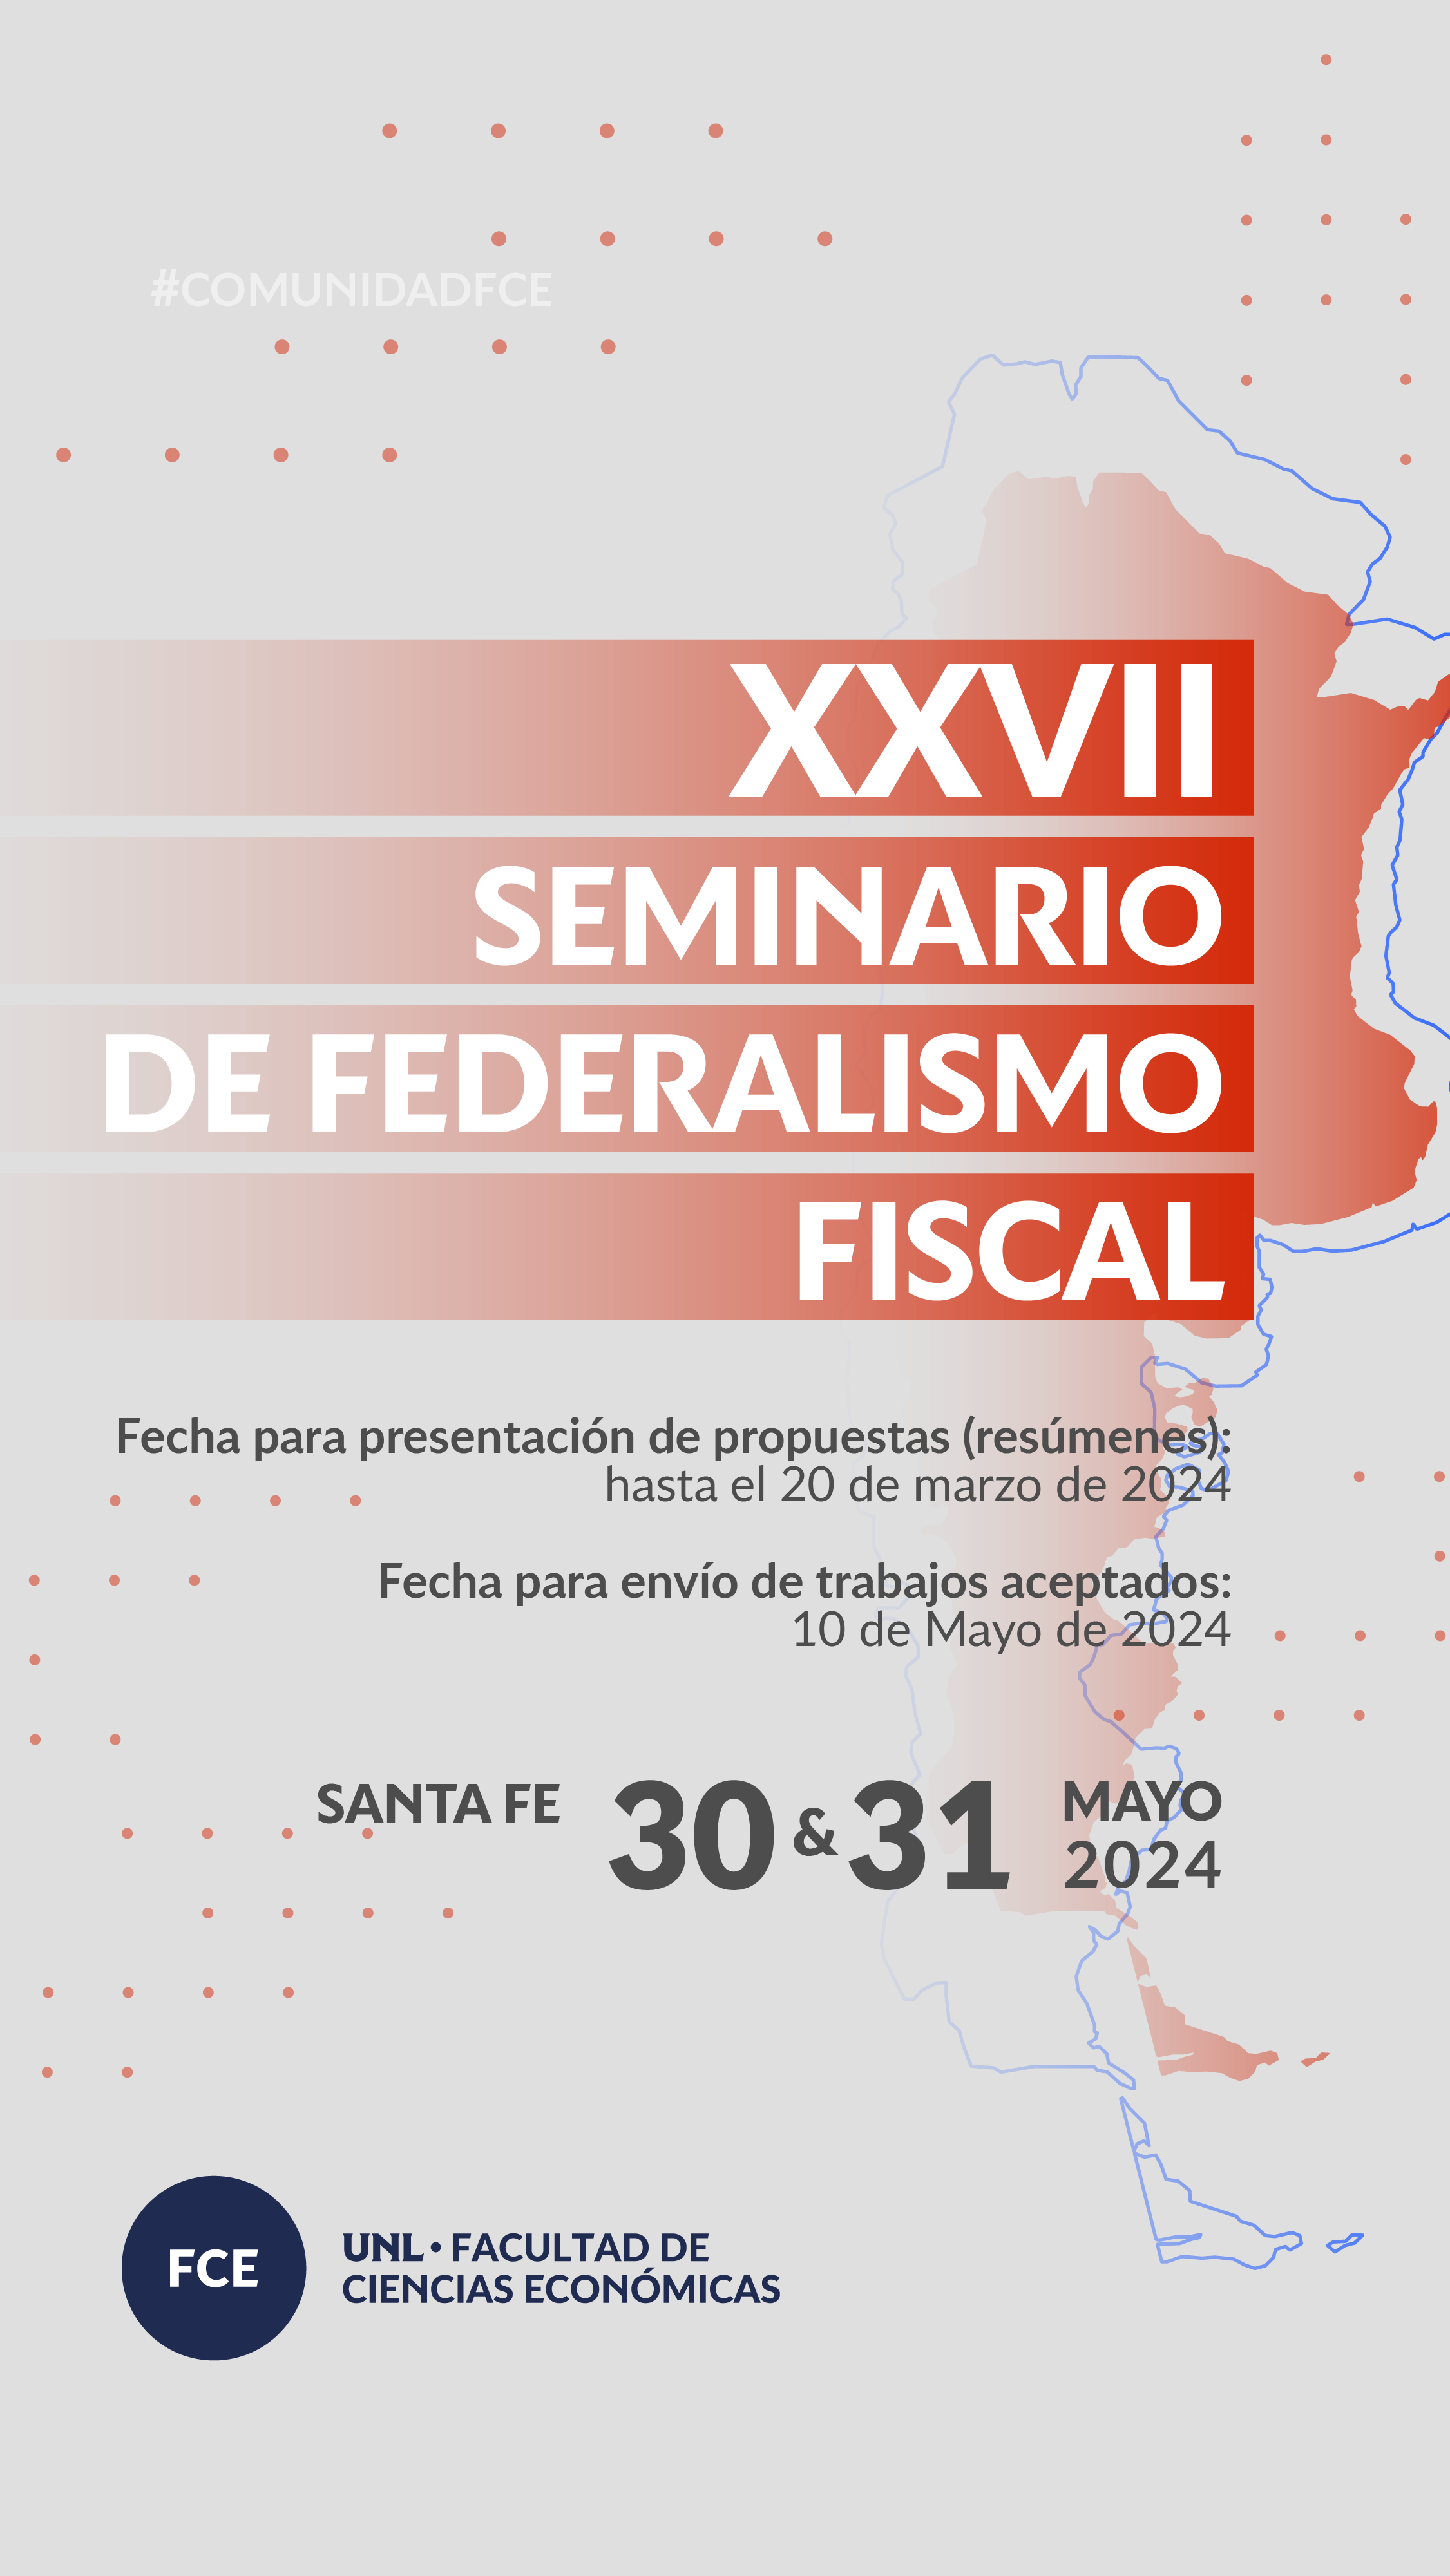 XXVII seminario federalismo fiscal